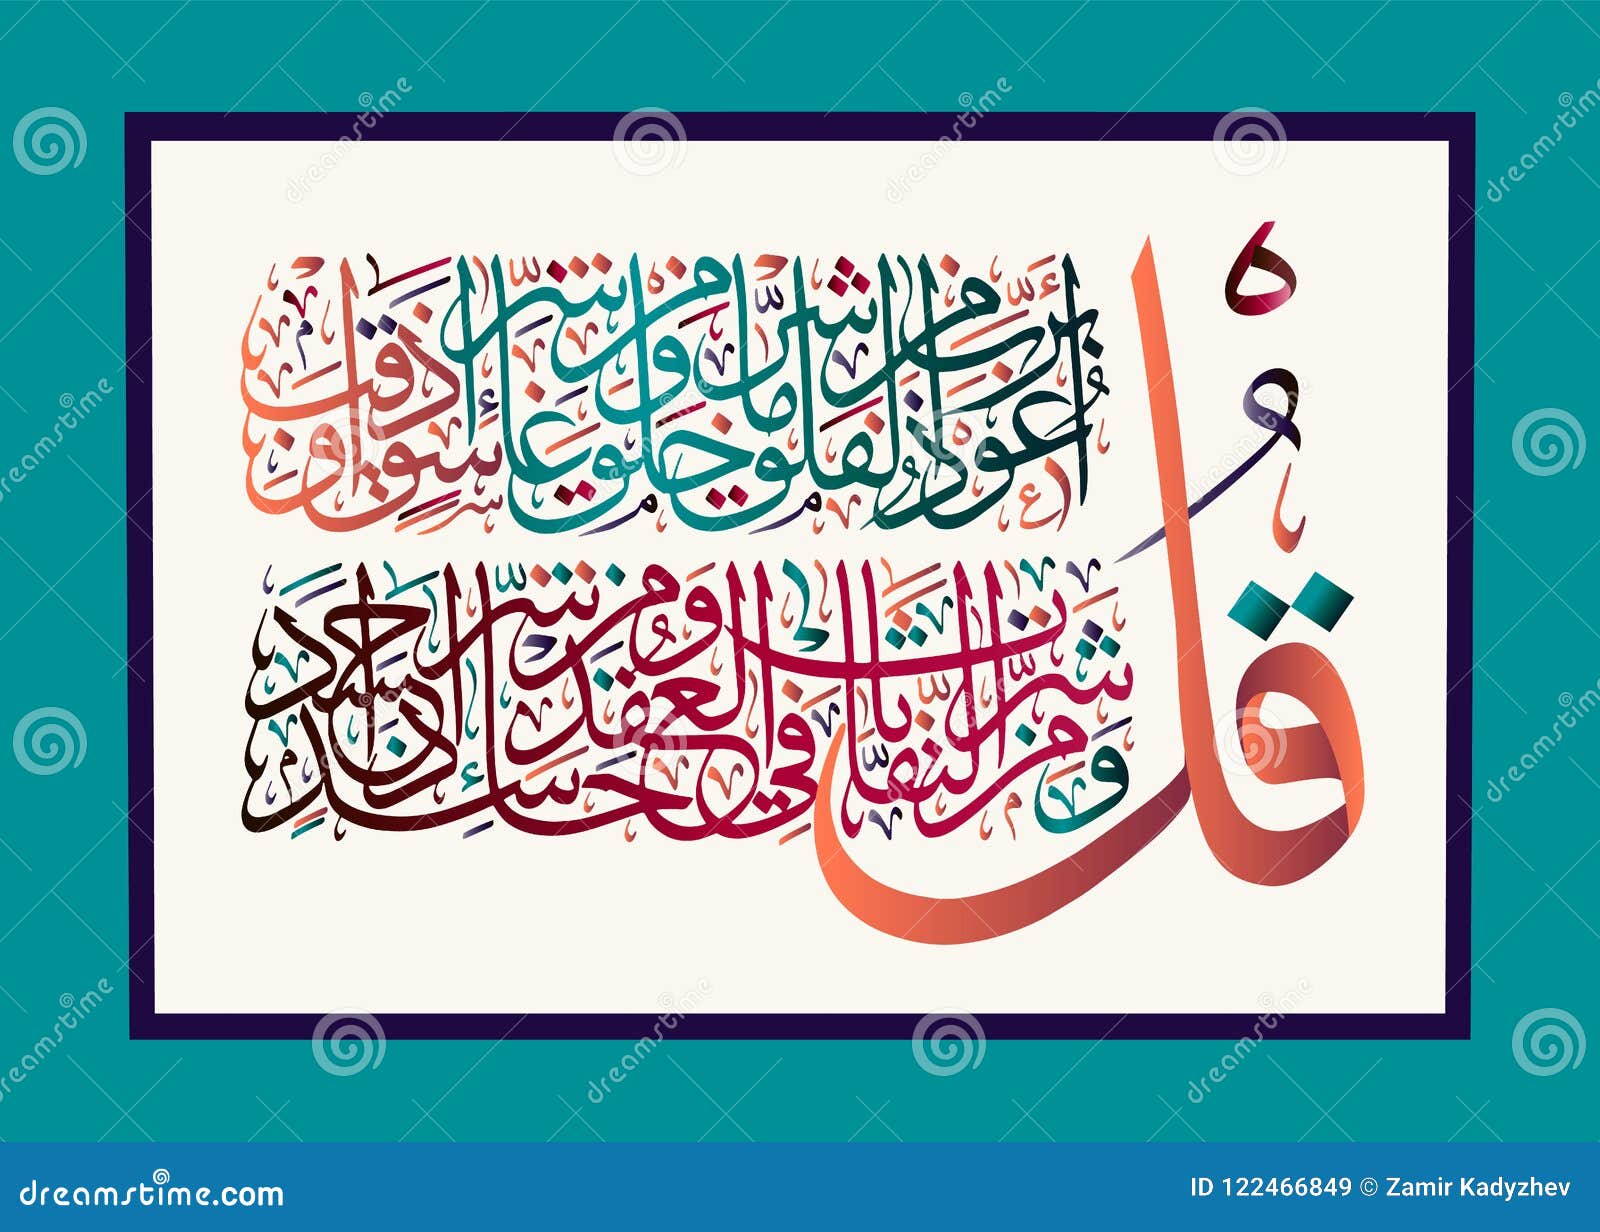 islamic calligraphy from the quran surah al-falaq 113.